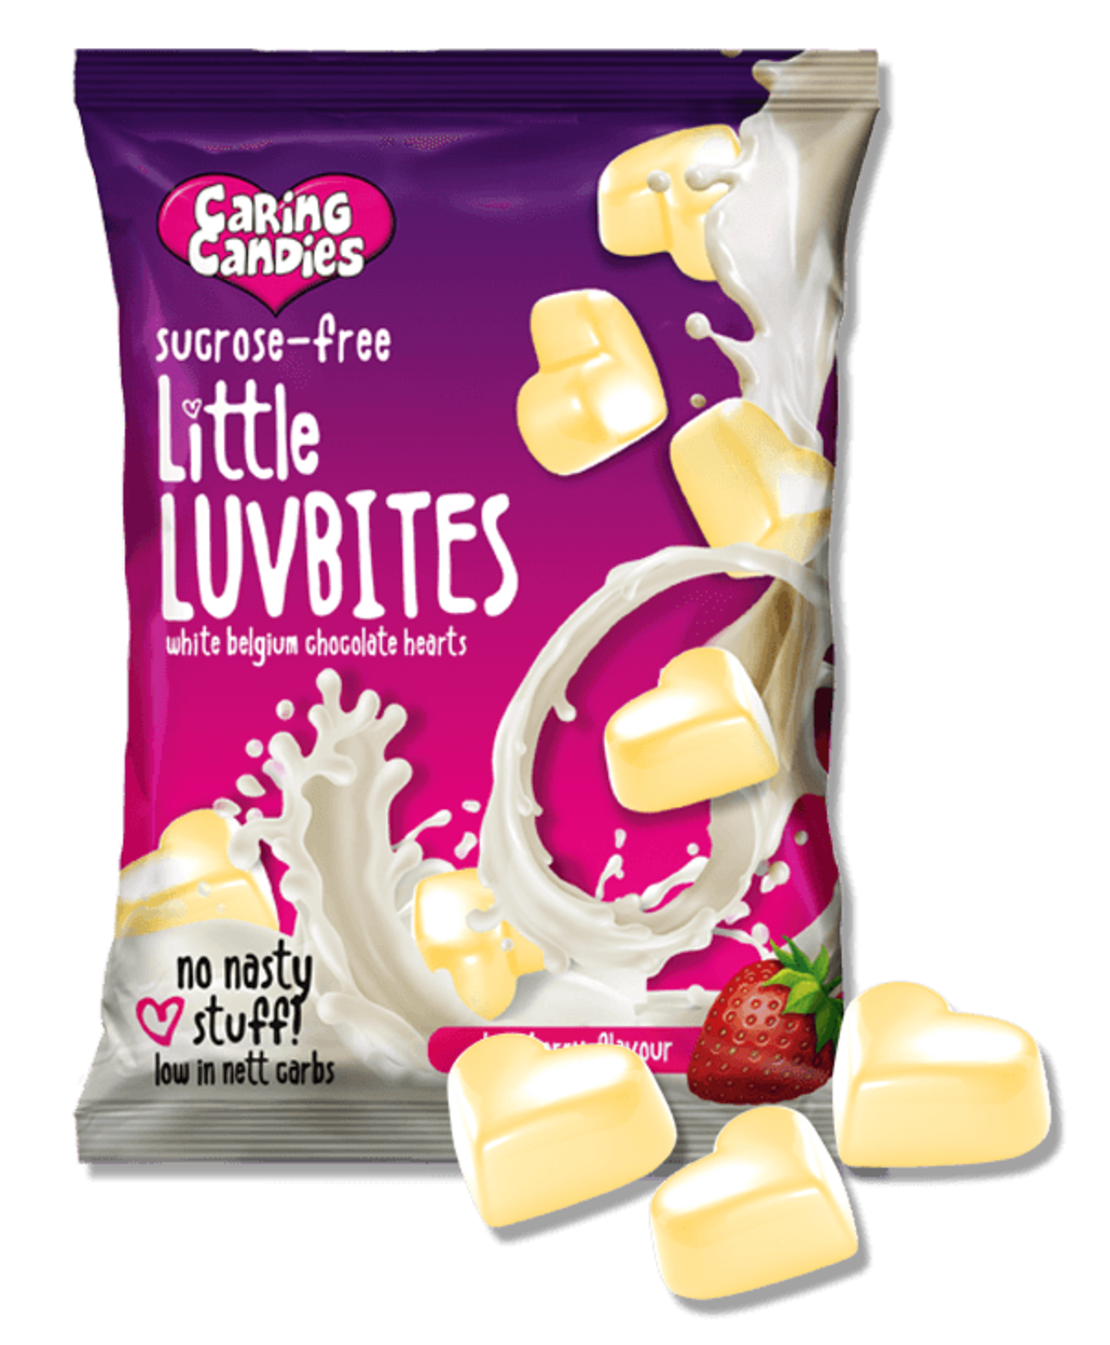 Little Luvbites Sucrose Free White Belgium Chocolate Hearts Strawberry Flavour - 100 gr